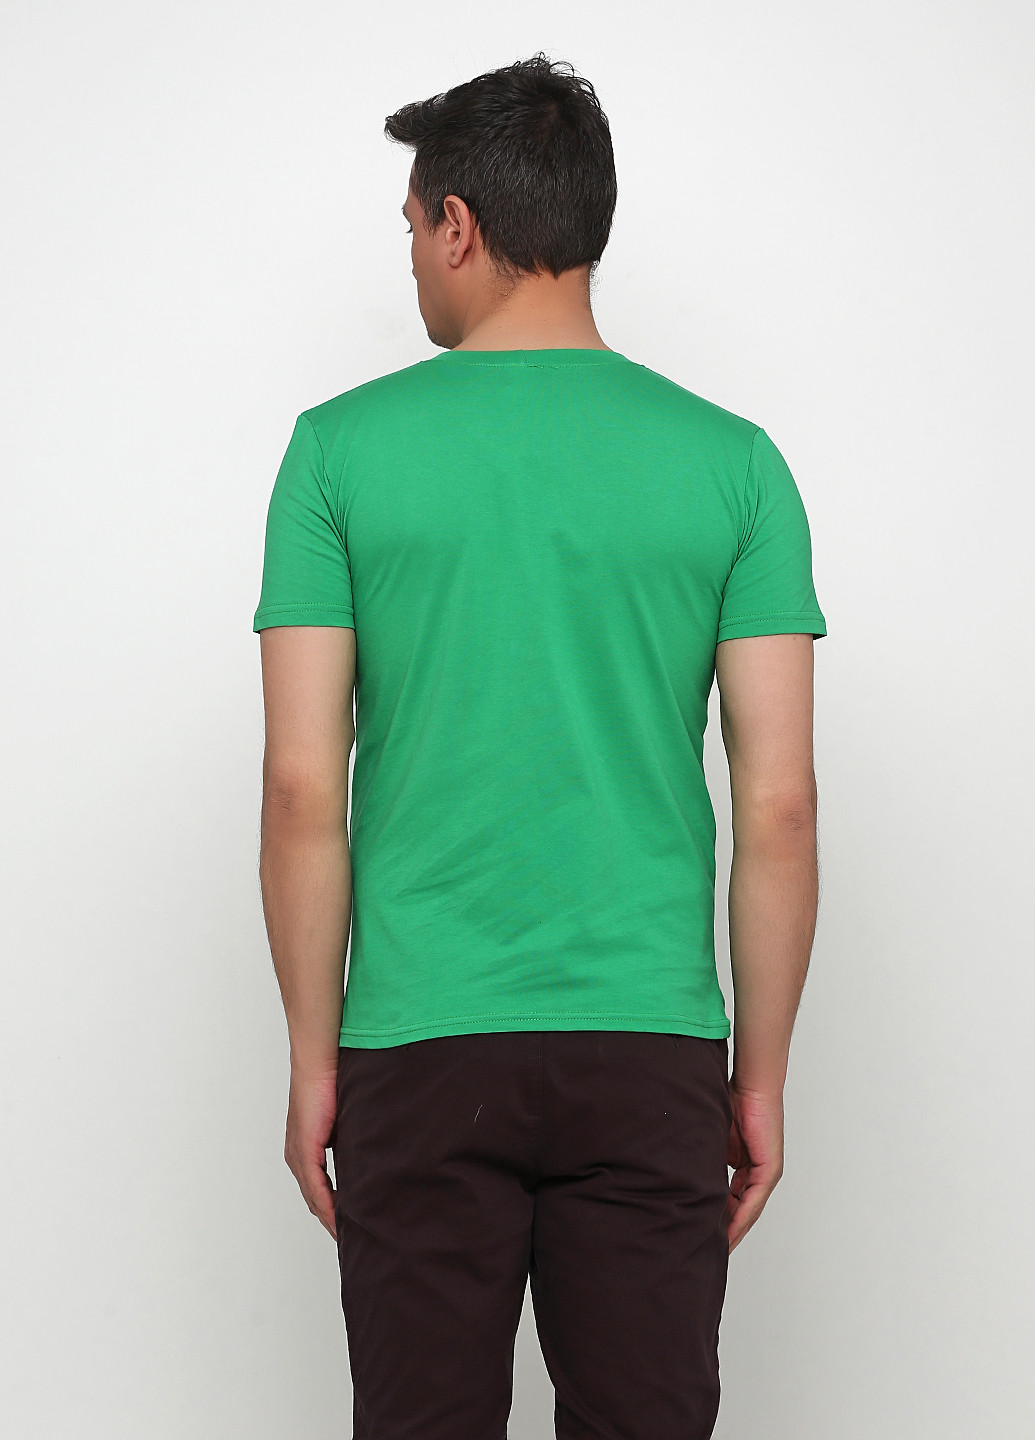 Зеленая футболка Трикомир